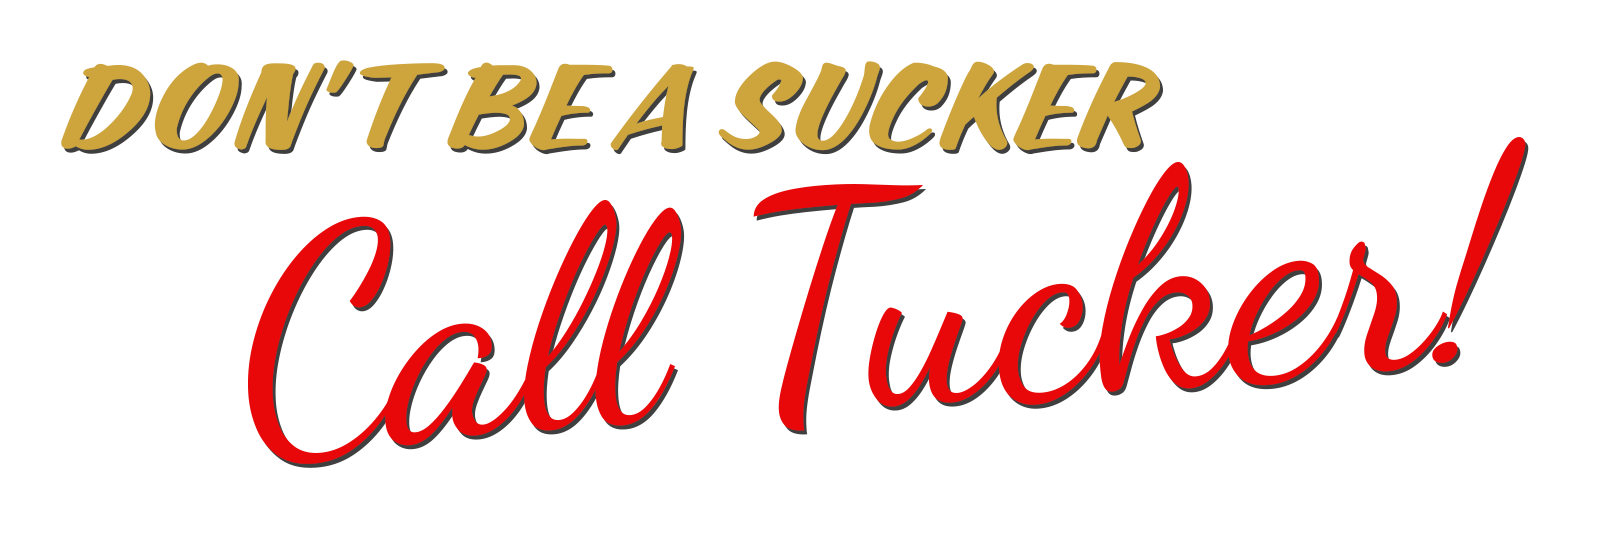 don't be a sucker, call tucker slogan 